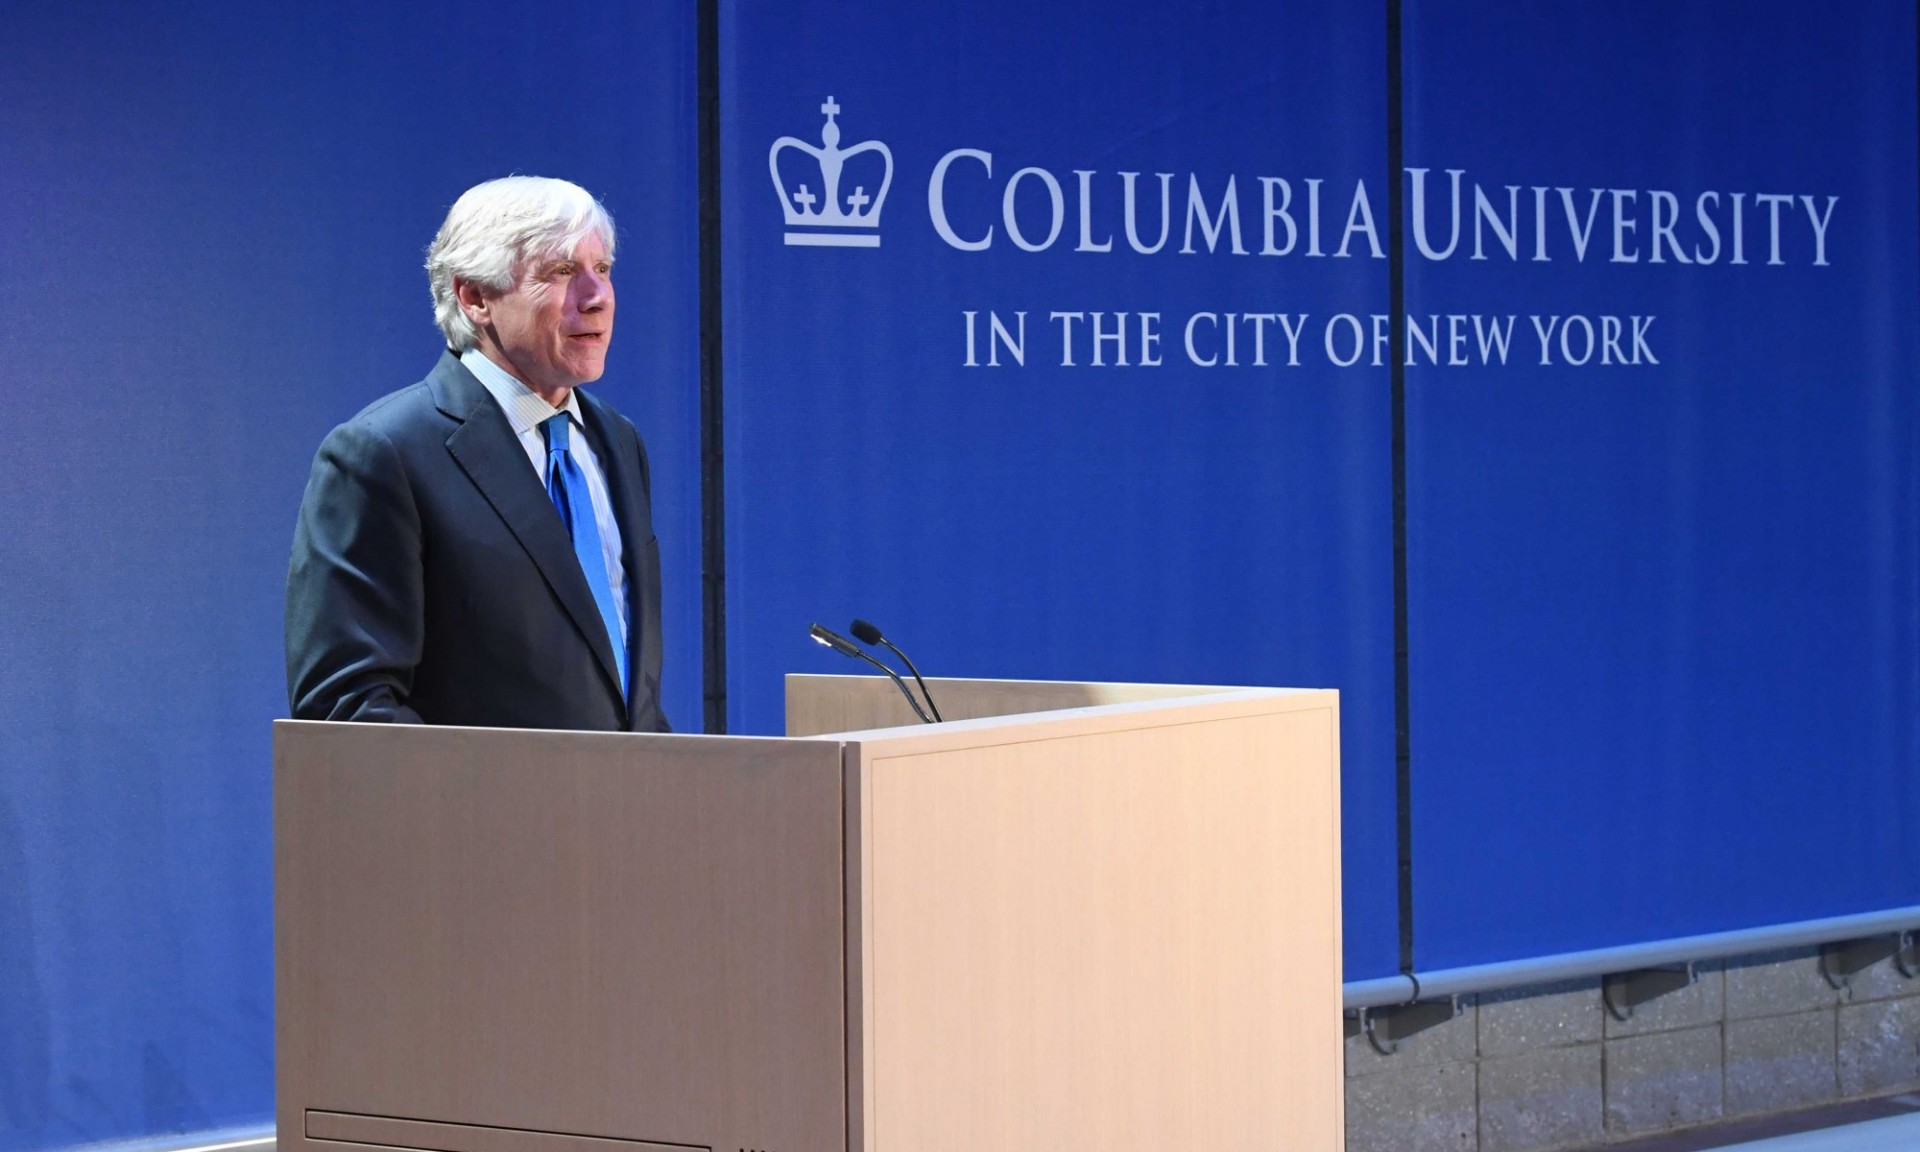 Photo of Lee Bollinger speaking at a podium in the Forum Building auditorium